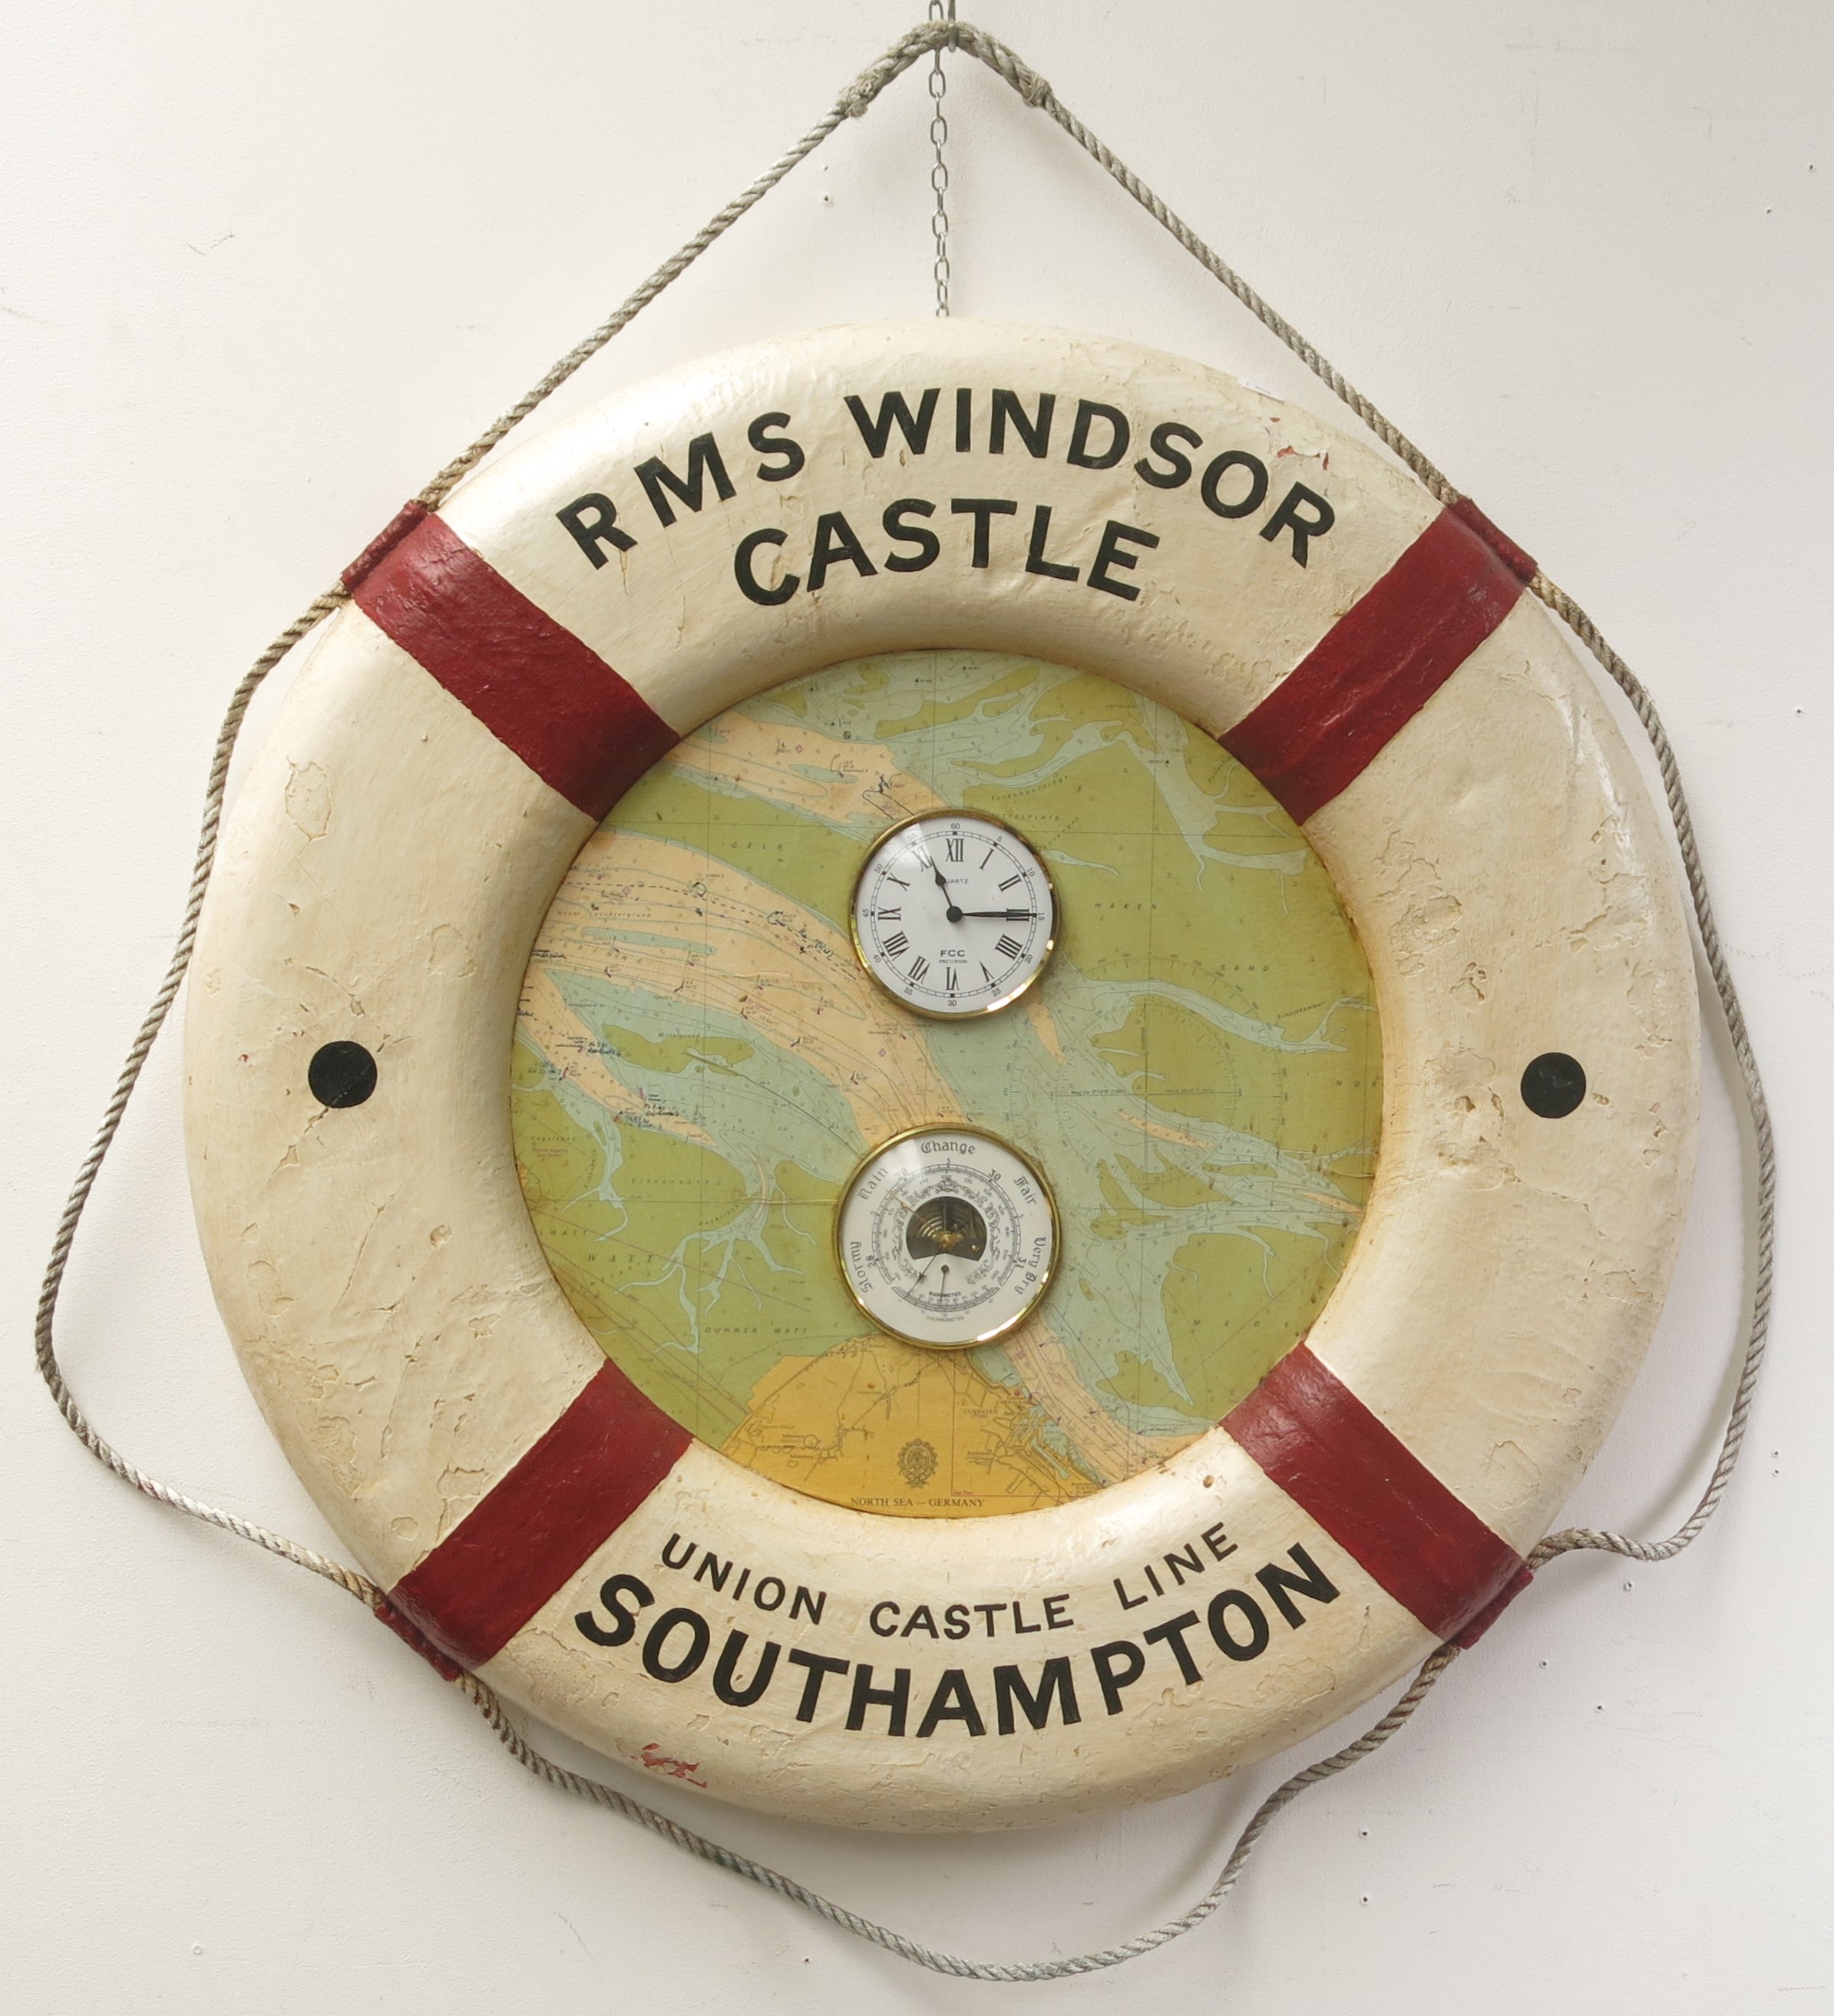 A Ship's life ring, painted 'RMS Windsor Castle Union Castle line Southampton',